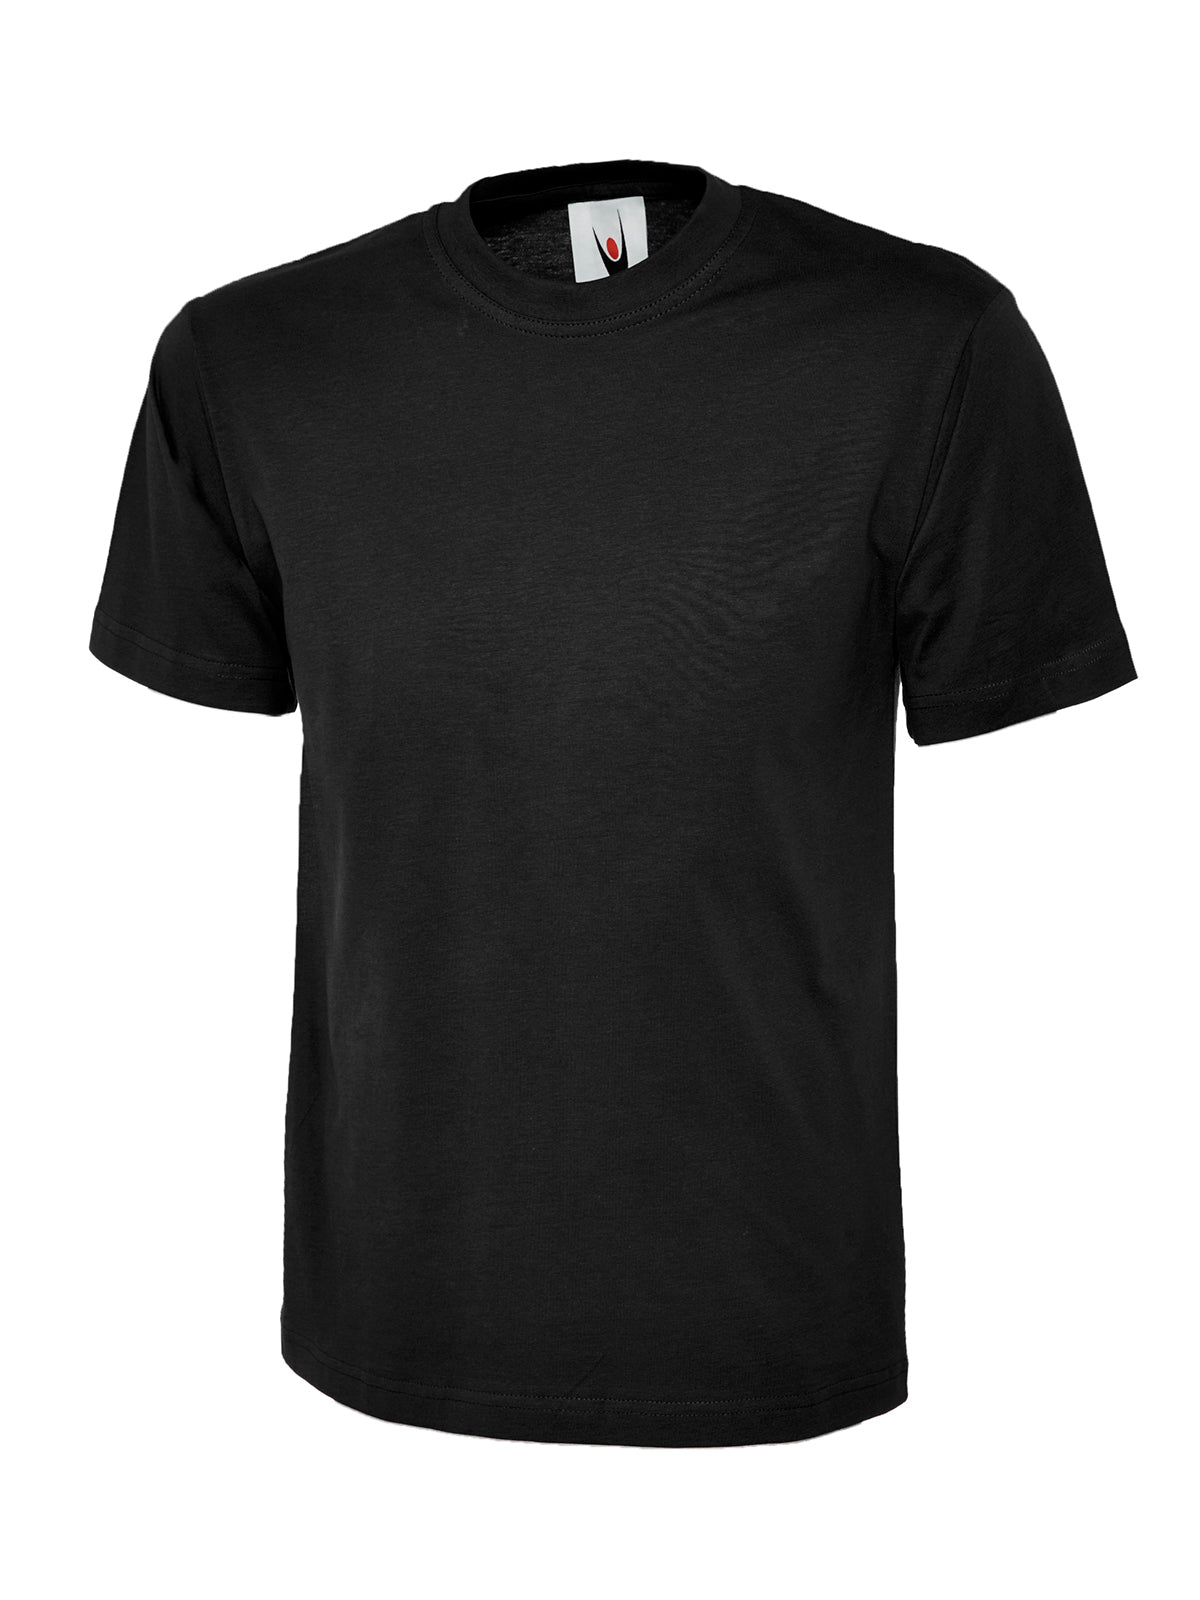 Uneek Classic T-shirt UC301 - Black